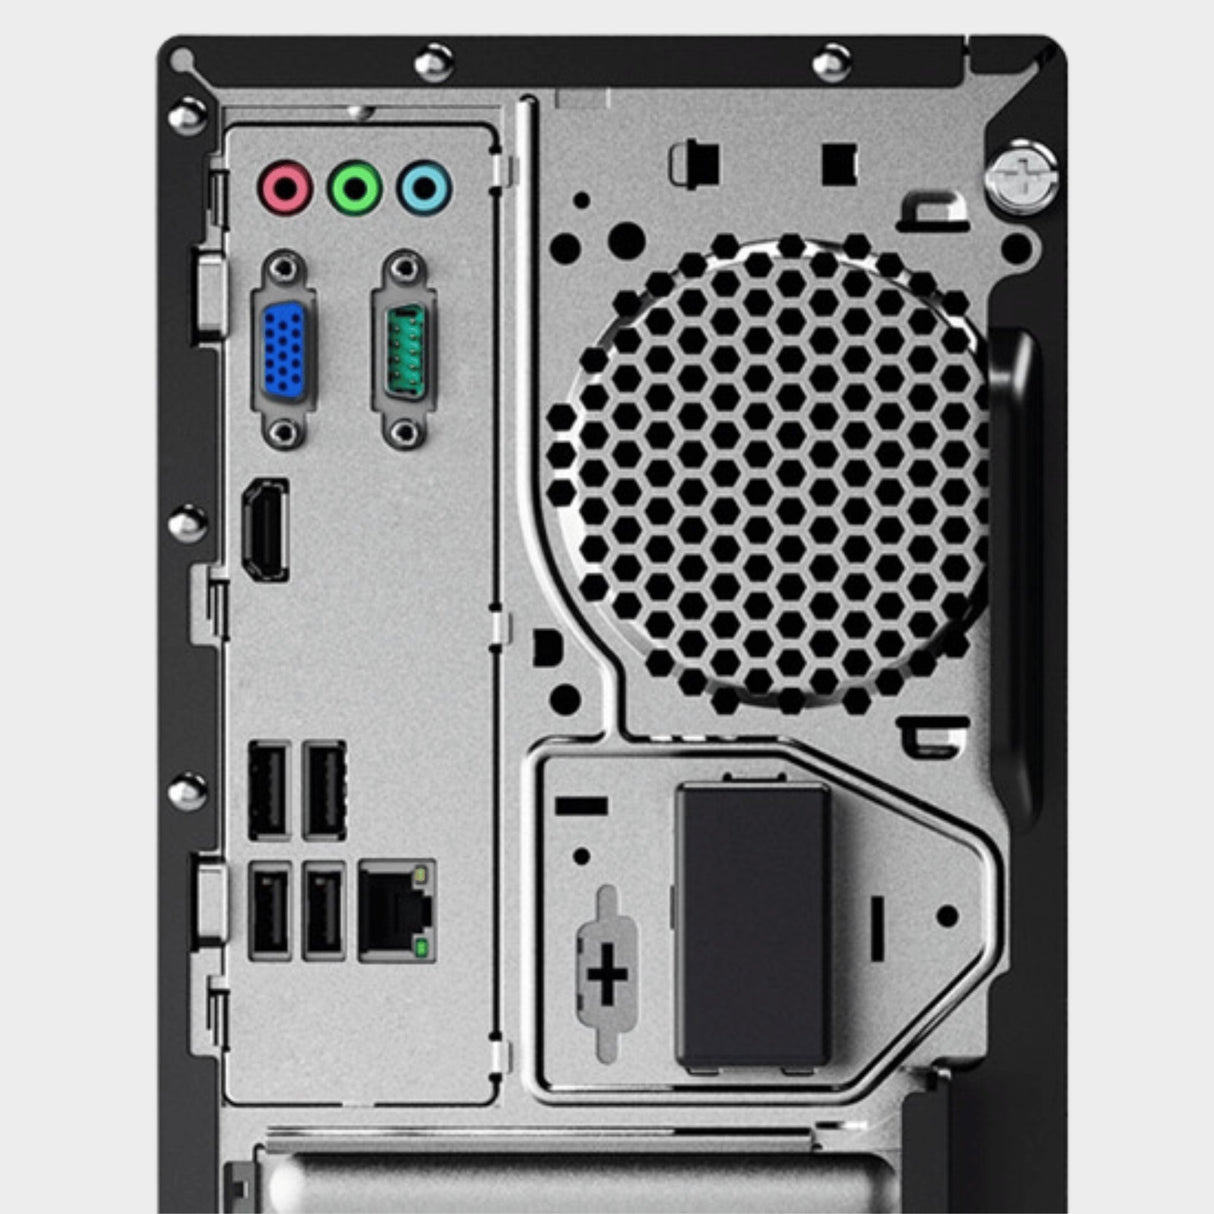 Lenovo V520-15IKL Tower Desktop Core i7, 7700, 4GB/1TB HDD  - KWT Tech Mart